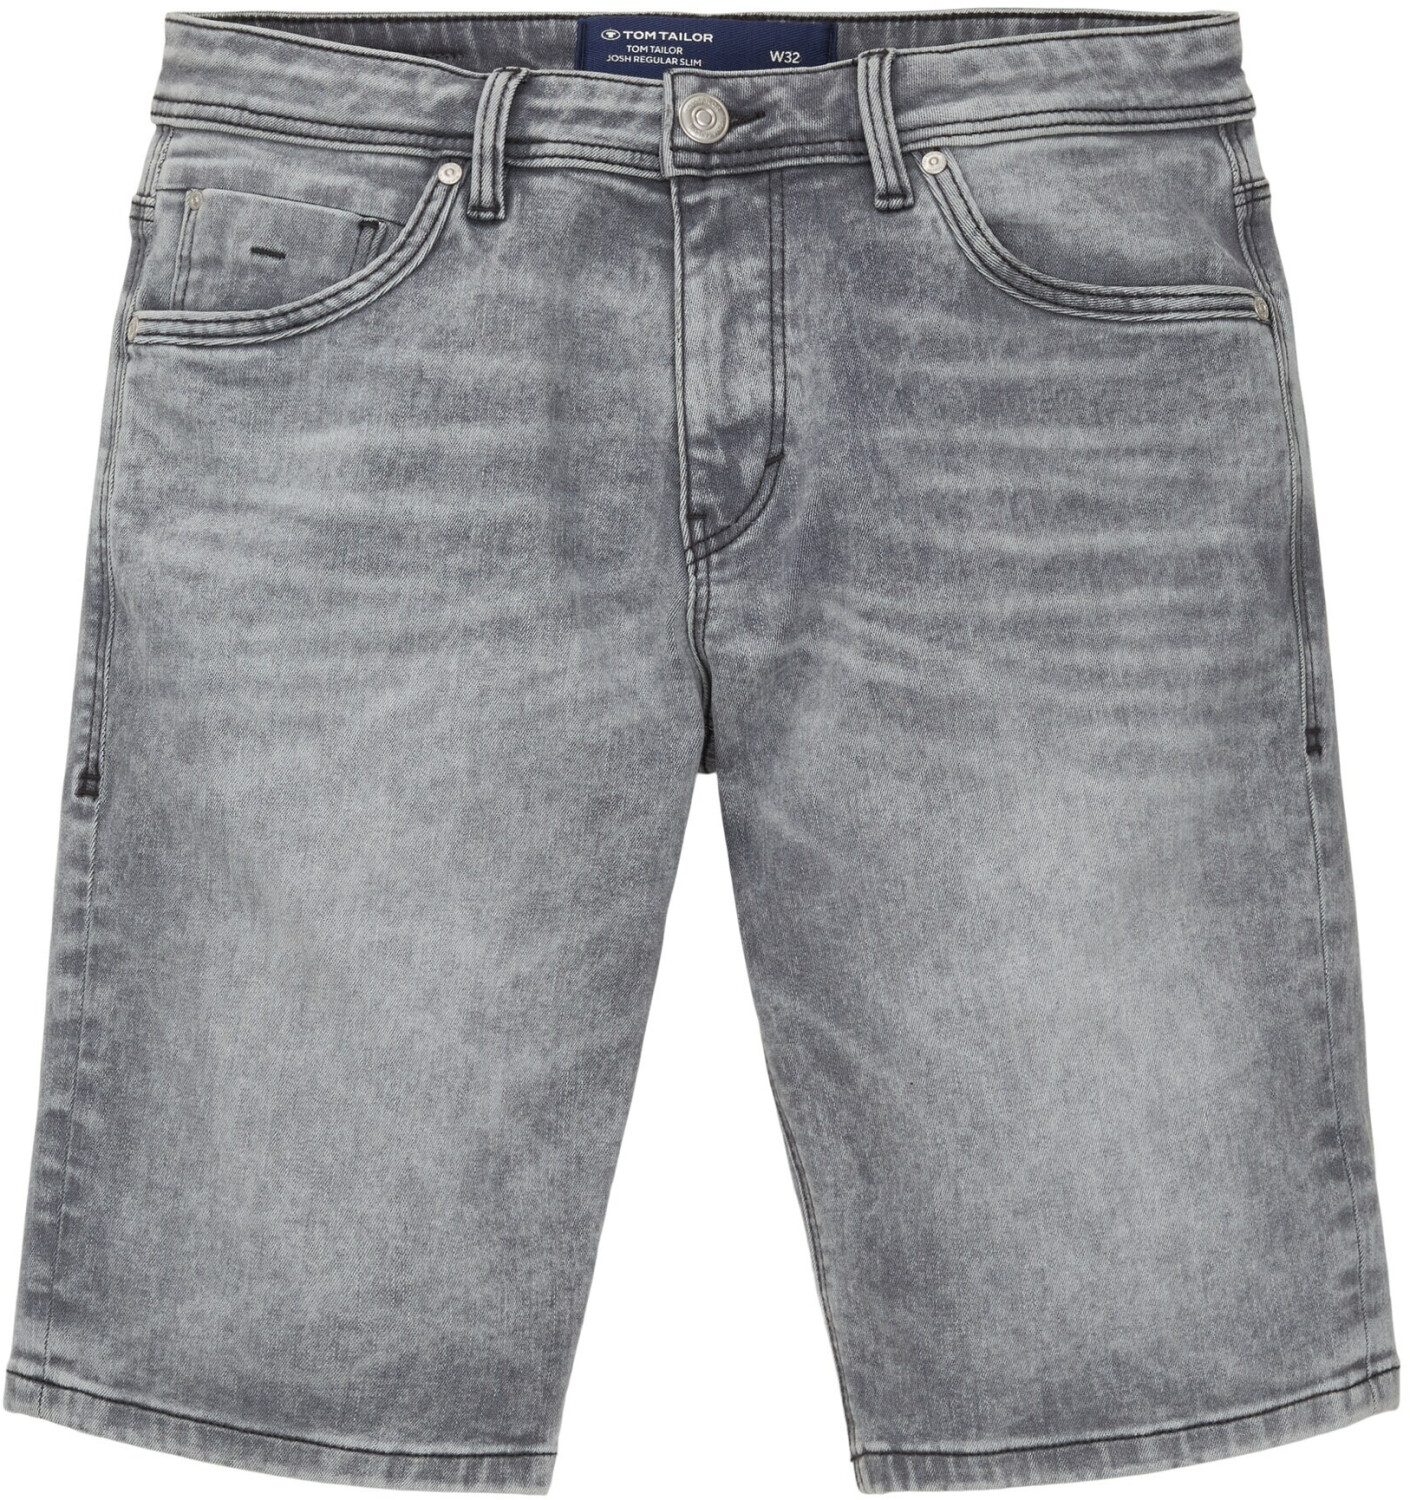 Tom Tailor Josh Jeans Shorts 13,59 black bei dark ab blue stone (1035656-10173) | € Preisvergleich denim